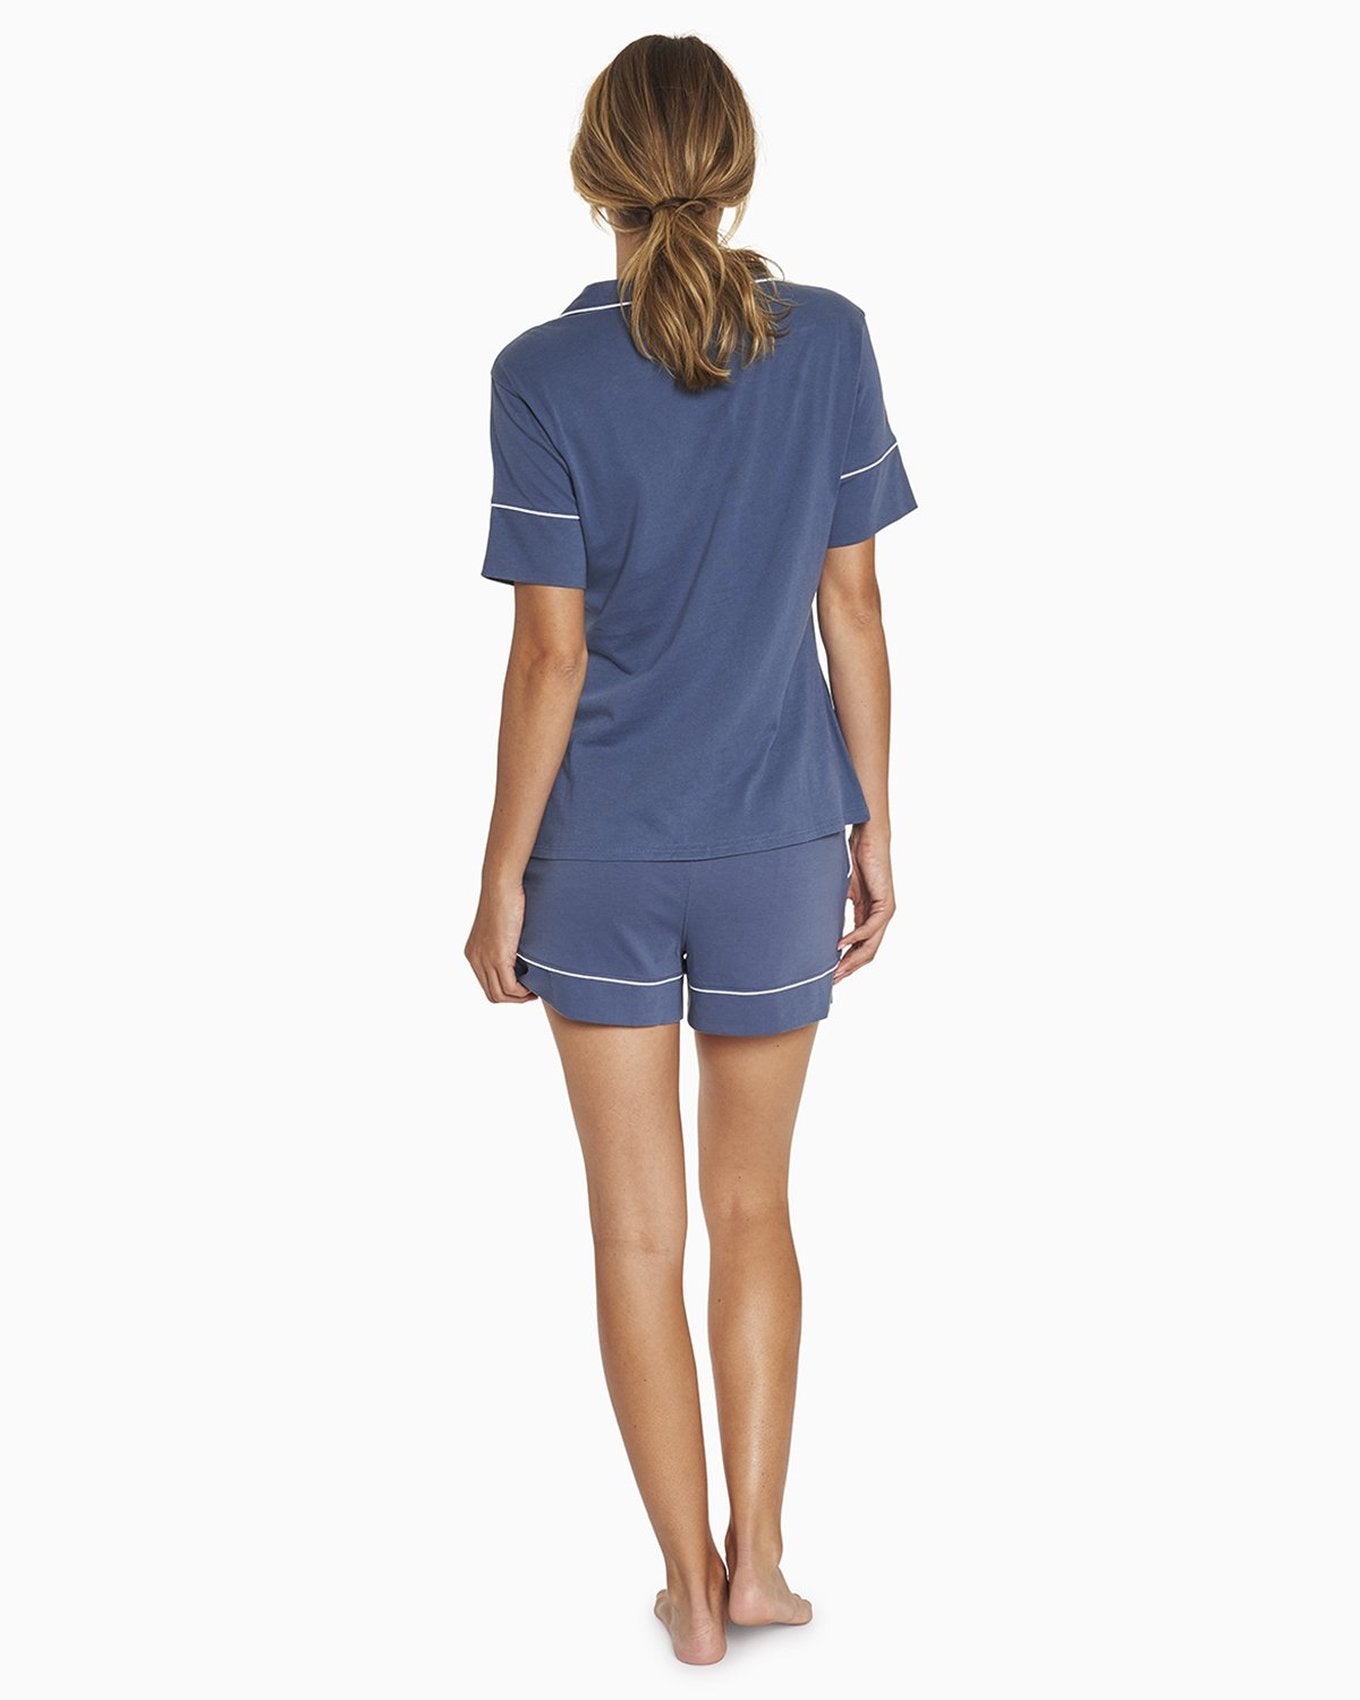 YesAnd Organic Short Sleeve Sleep Shirt Sleep Shirt in color Bering Sea and shape shirt